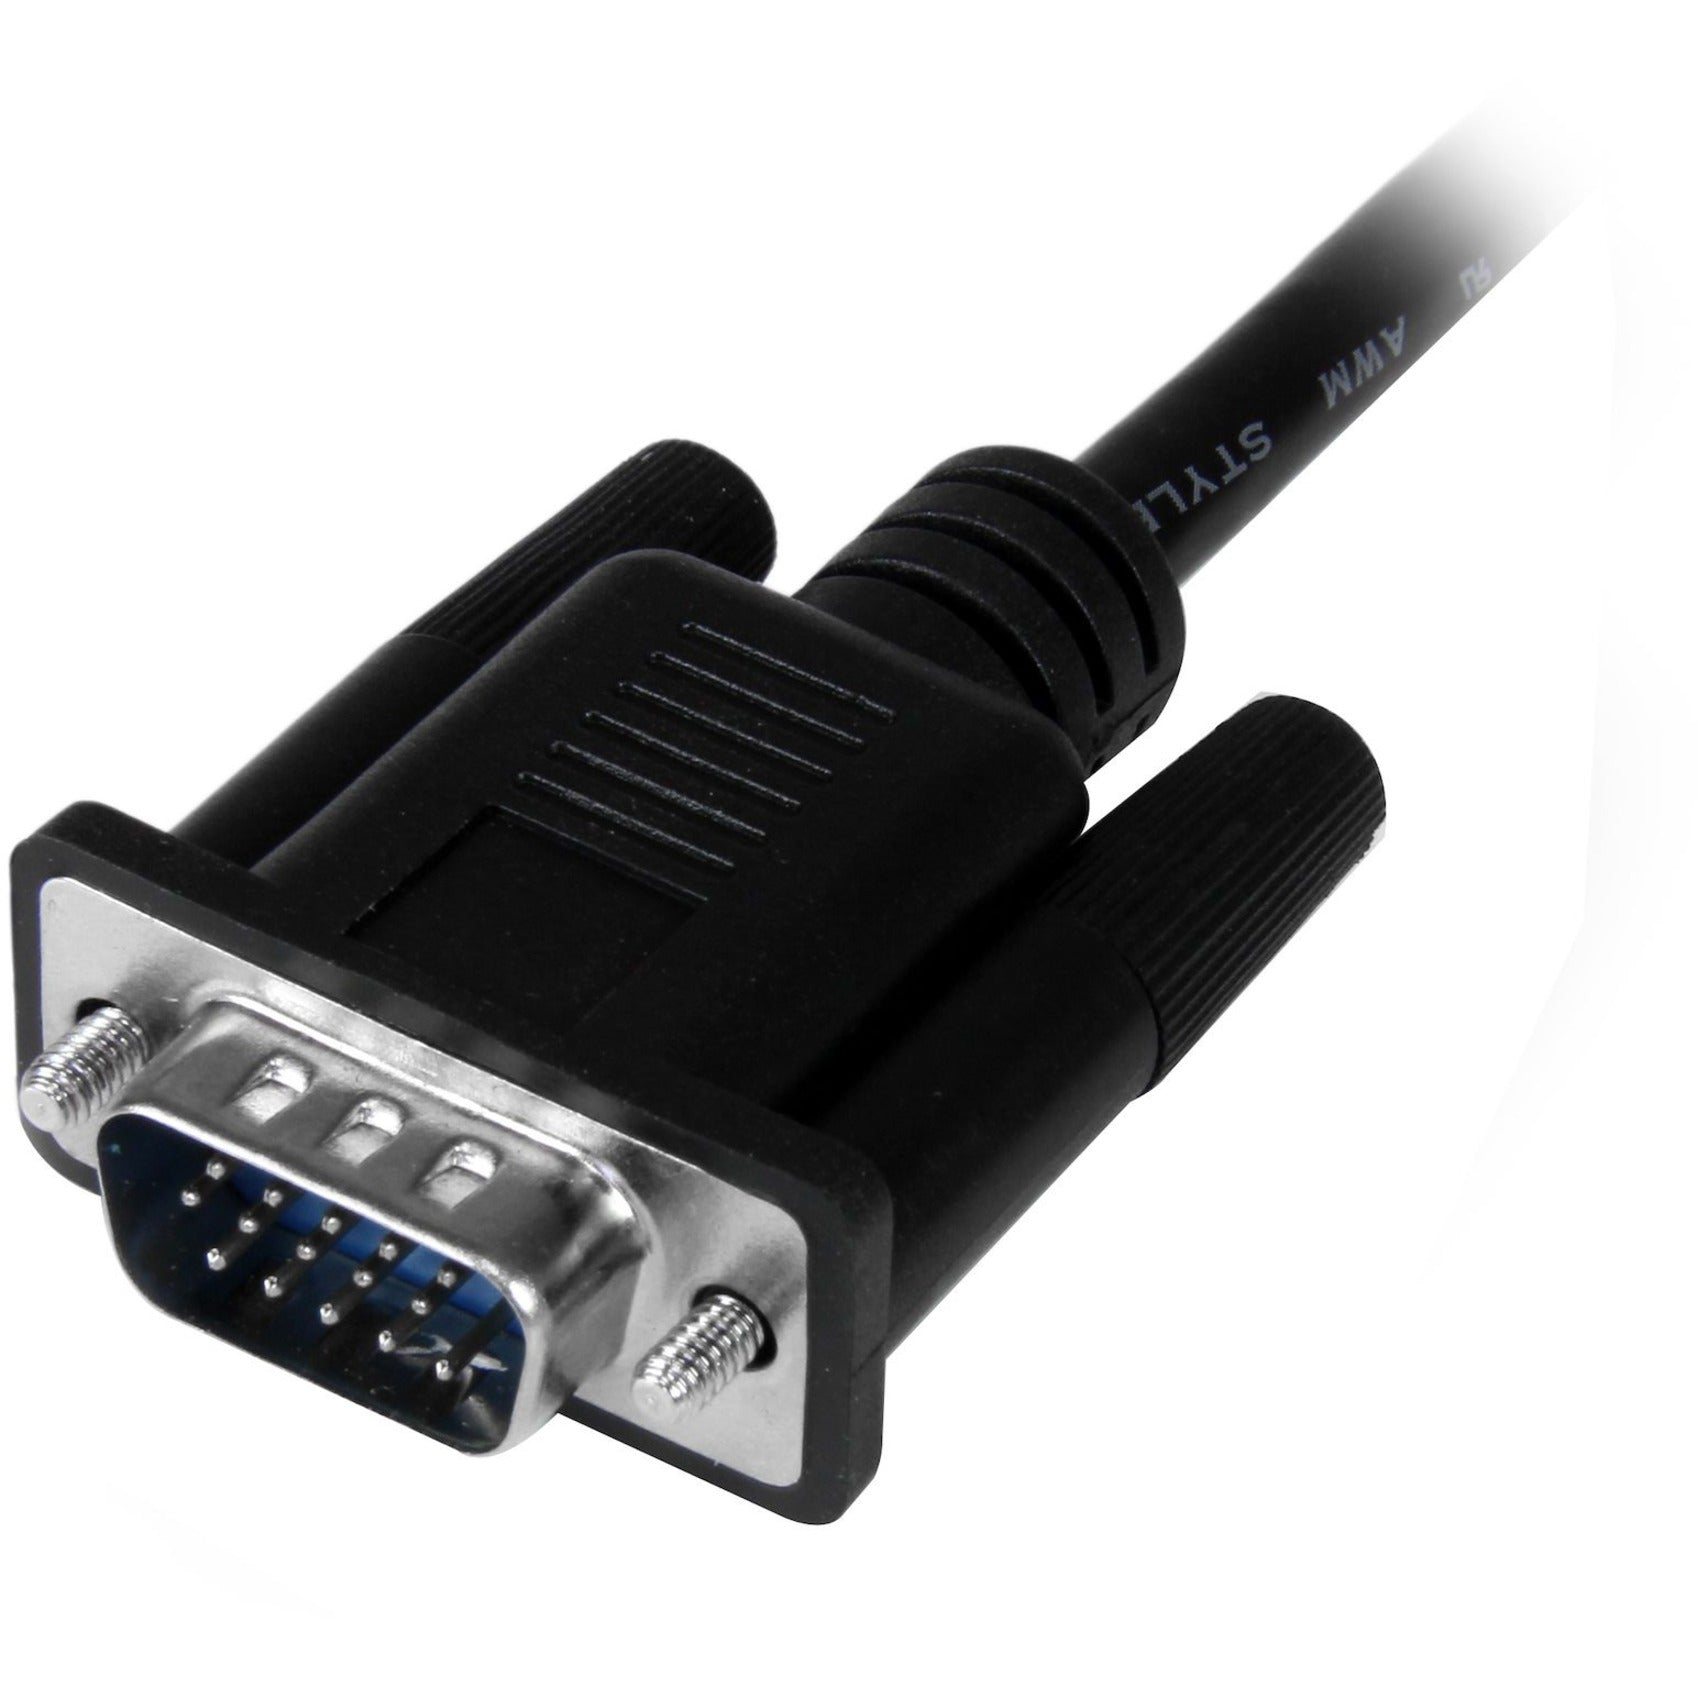 StarTech.com VGA2HDU VGA to HDMI Adapter with USB Power & Audio, Active, Black